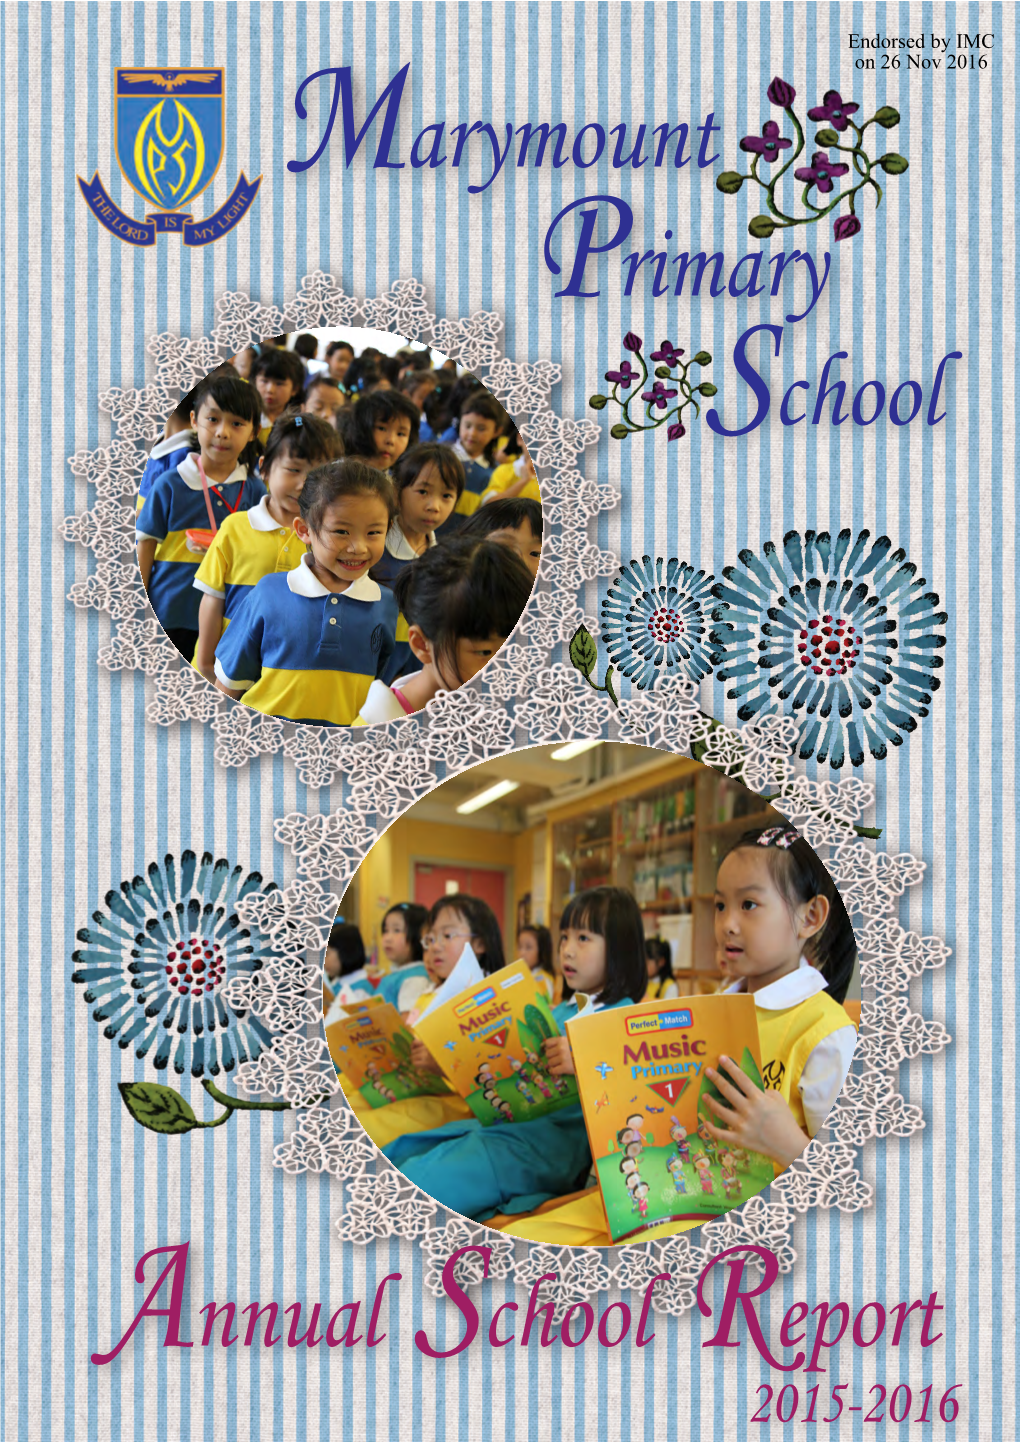 Annual School Report 2015-2016